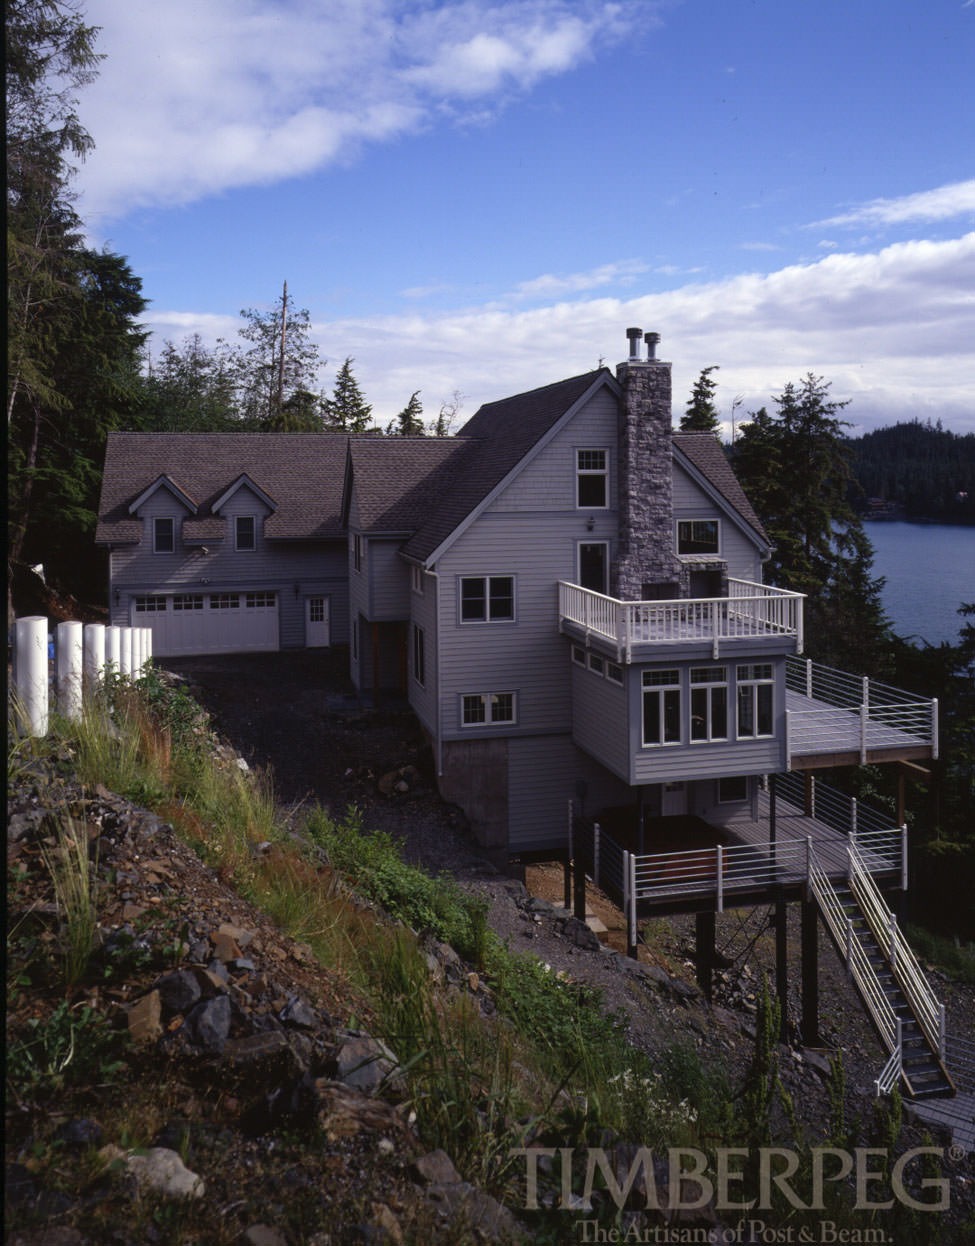 Cliffside, AK (4637) exterior view